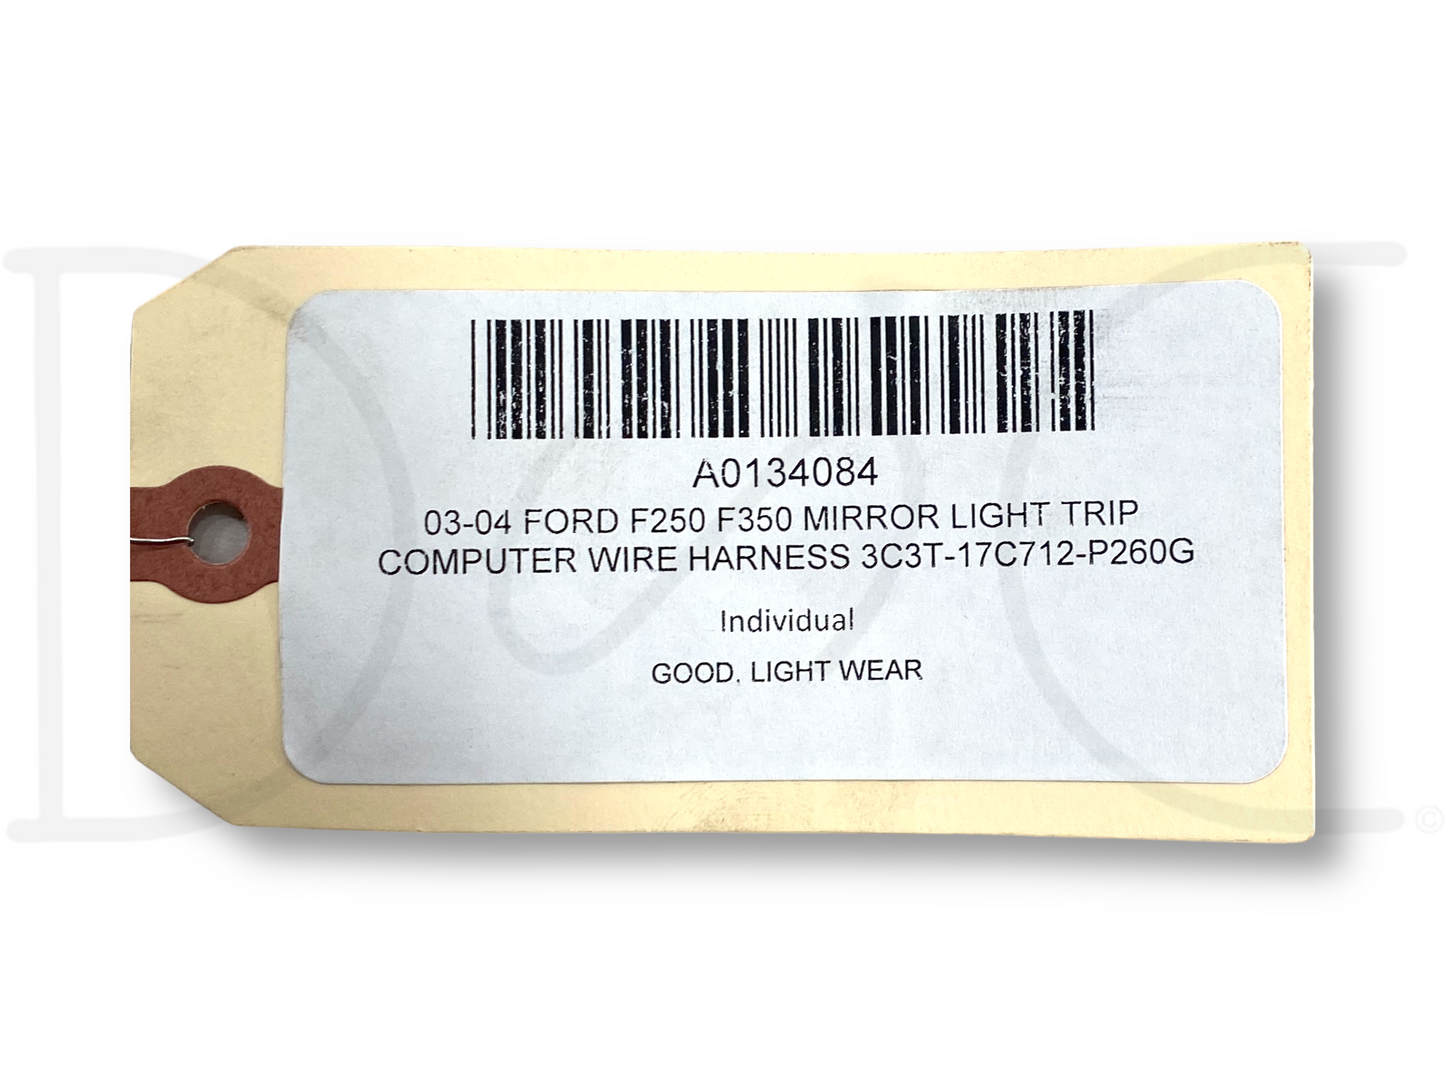 03-04 Ford F250 F350 Mirror Light Trip Computer Wire Harness 3C3T-17C712-P260G